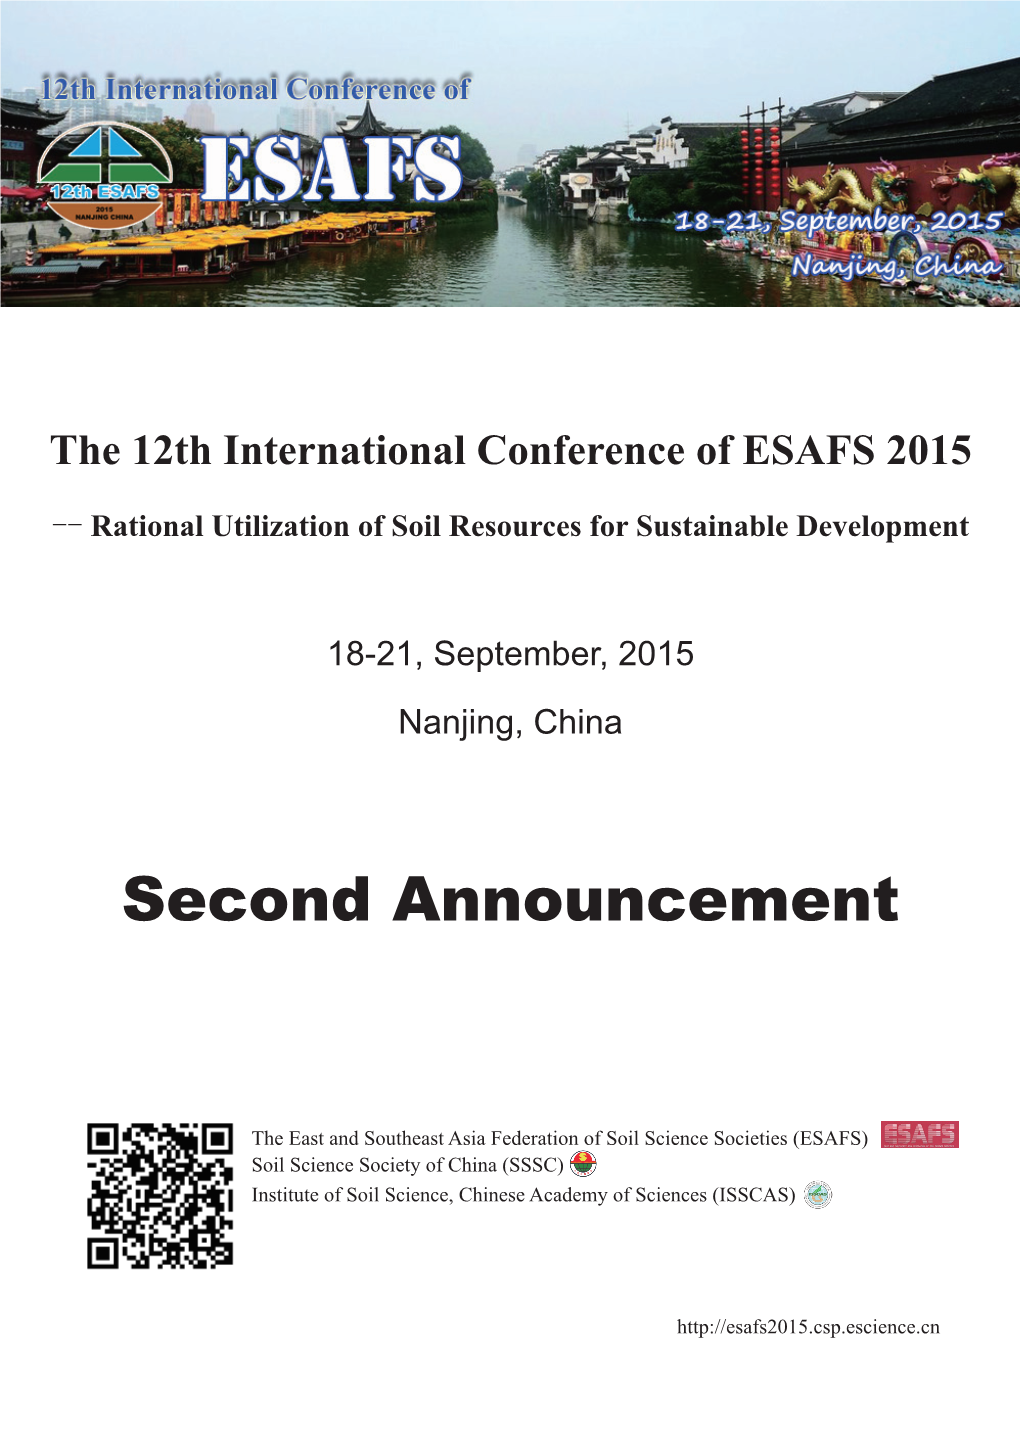 ESAFS2015 Second Announcement1